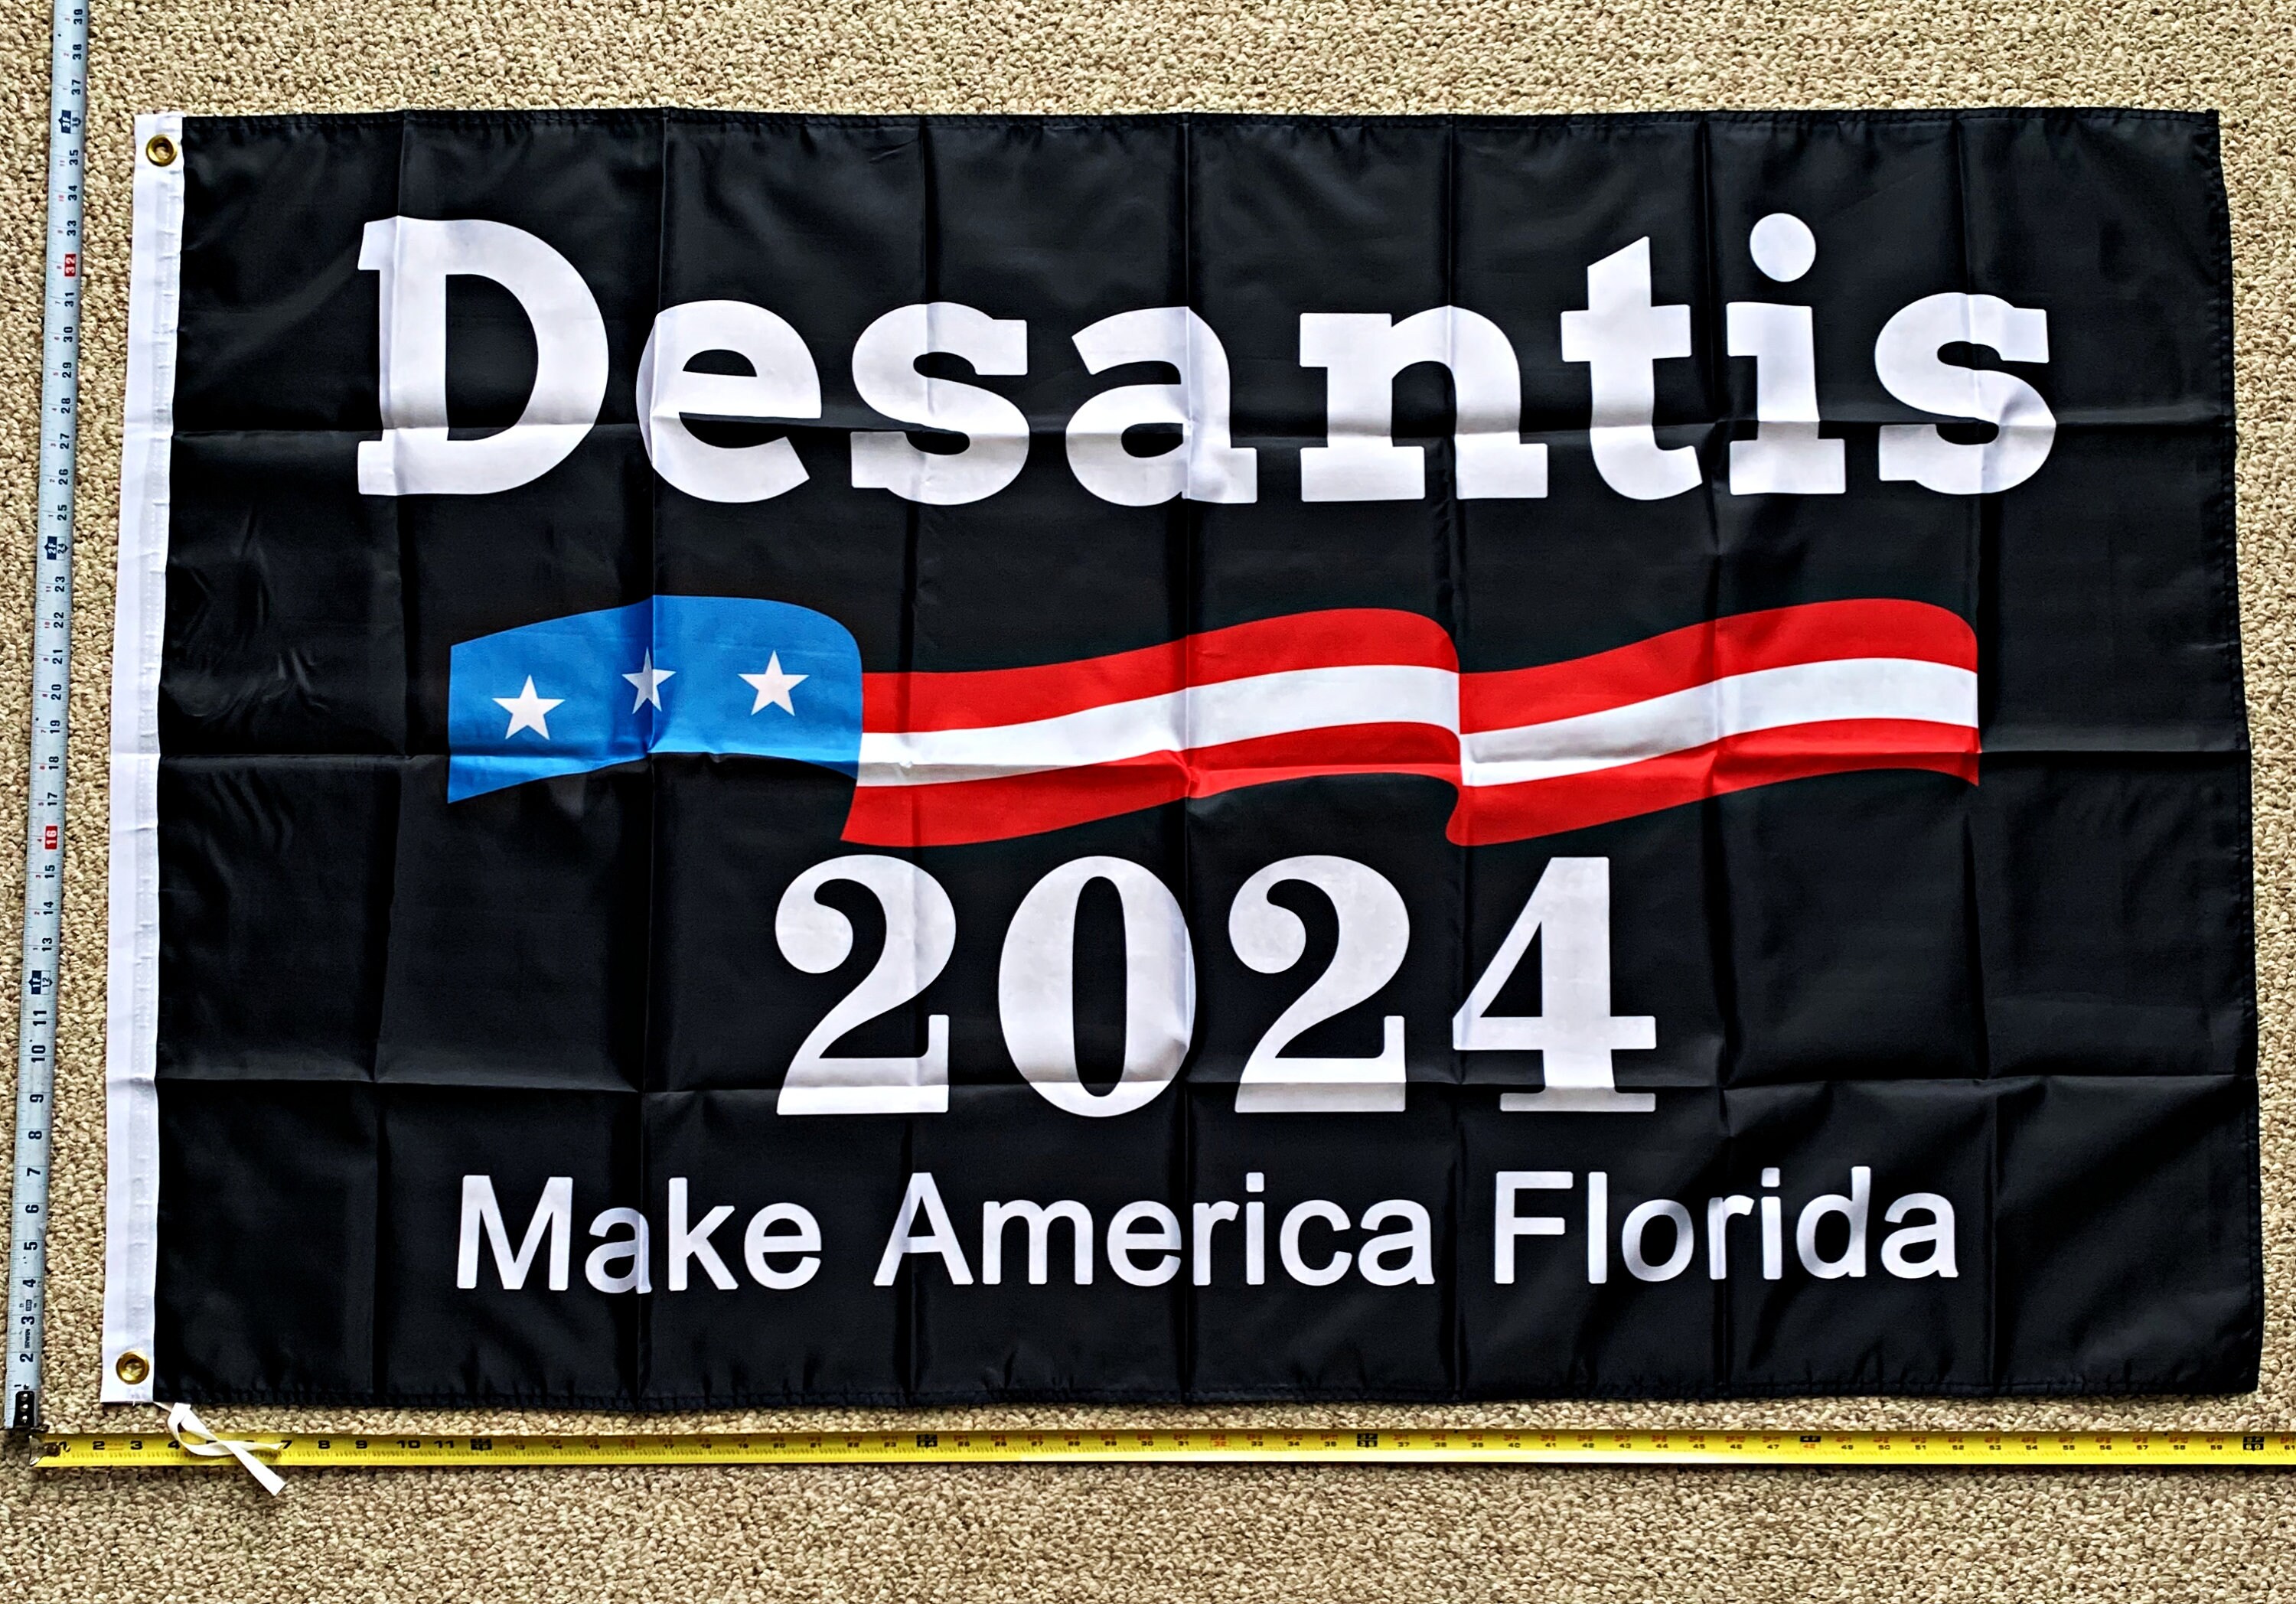 Ron Desantis Flag FREE SHIPPING Don Jr 2024 Ivanka Make | Etsy